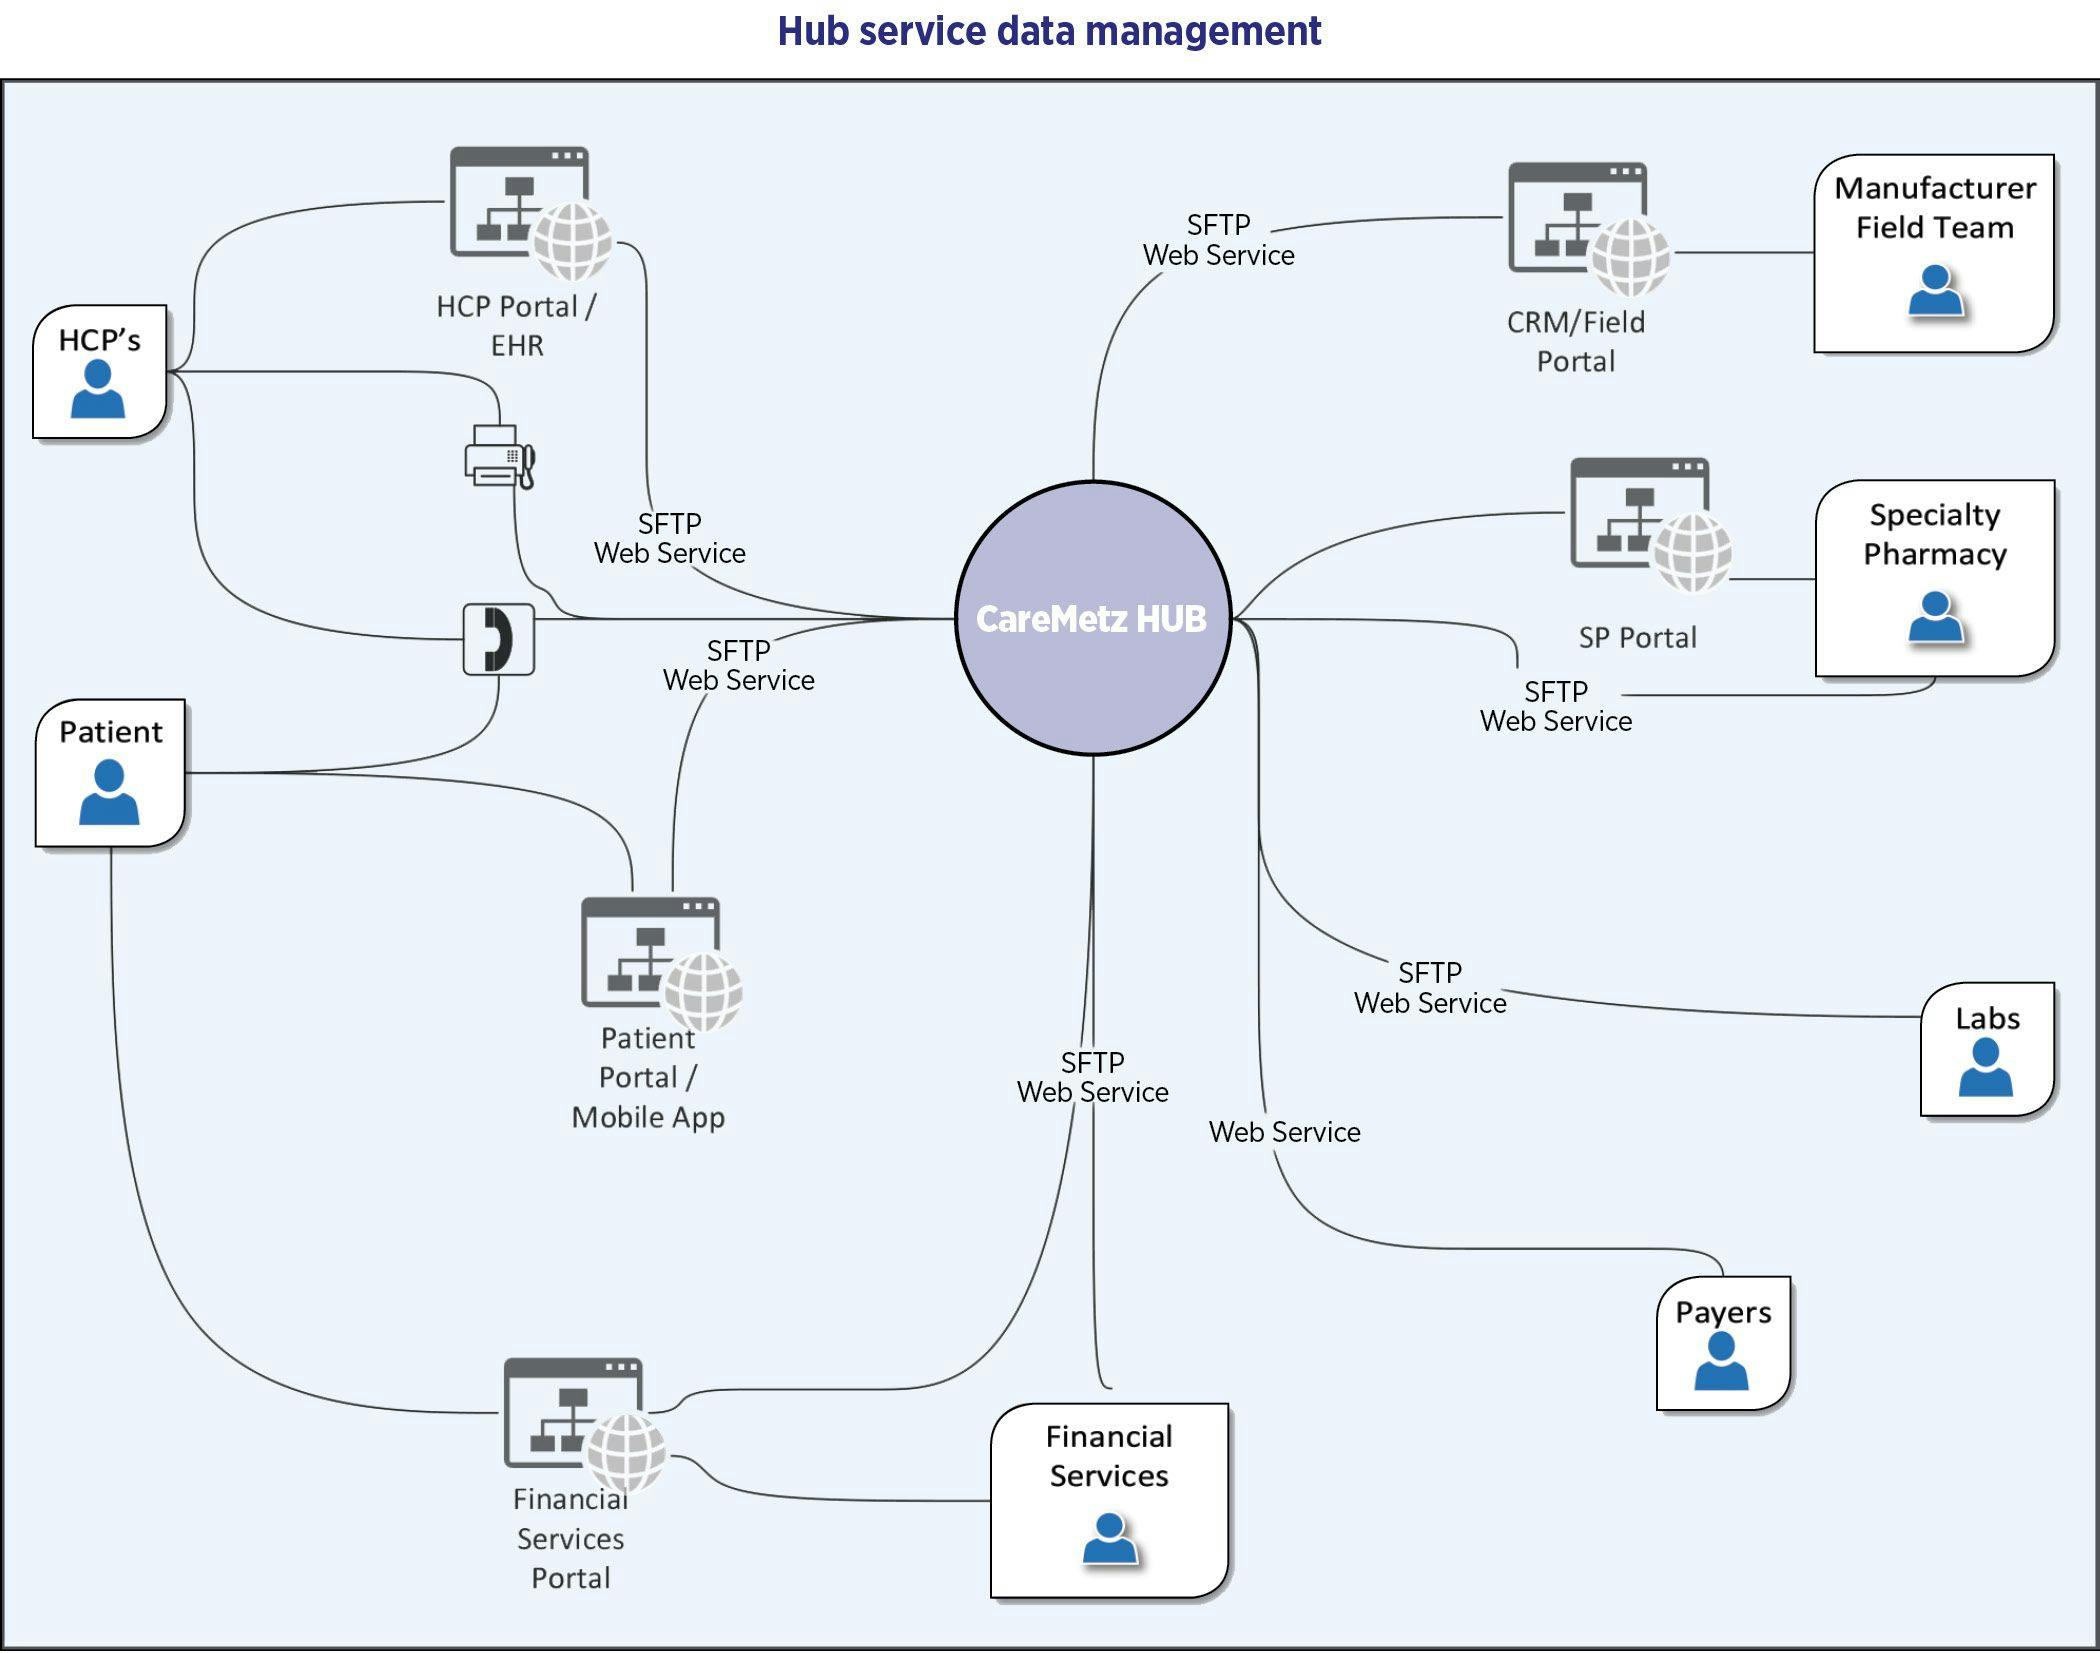 Hub services data management